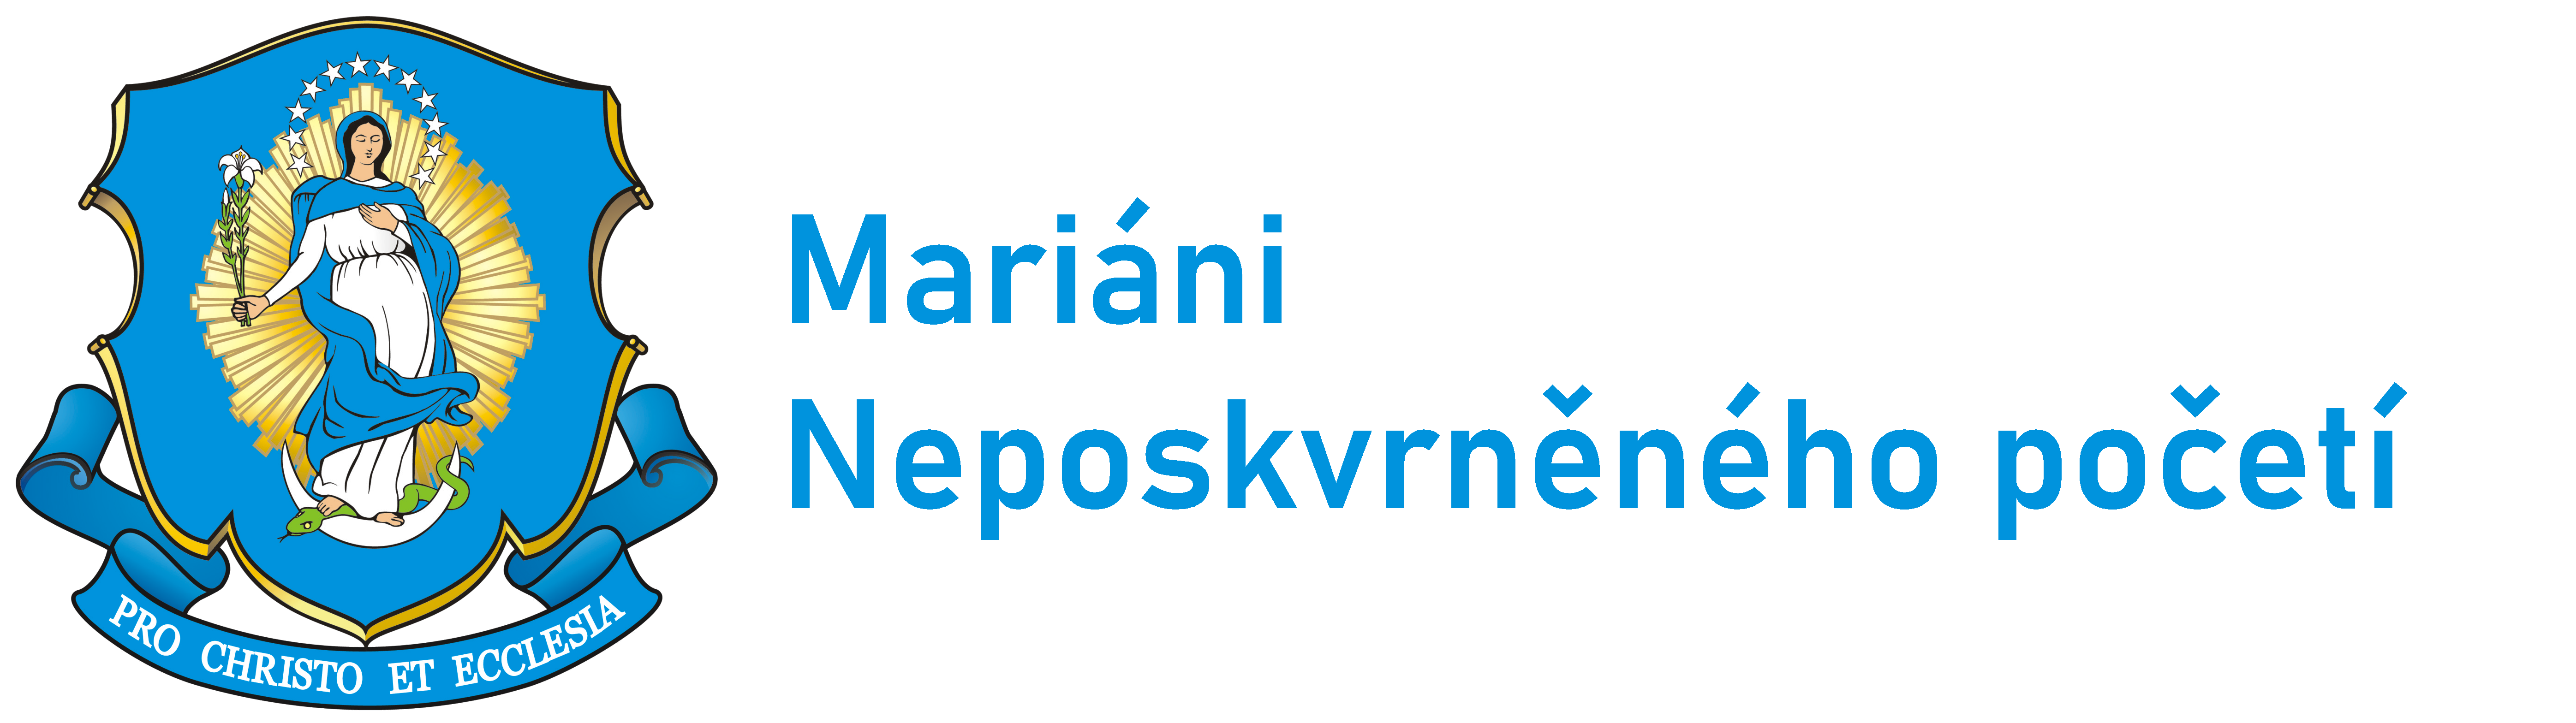 Logo Chci se zeptat - Mariáni ČR